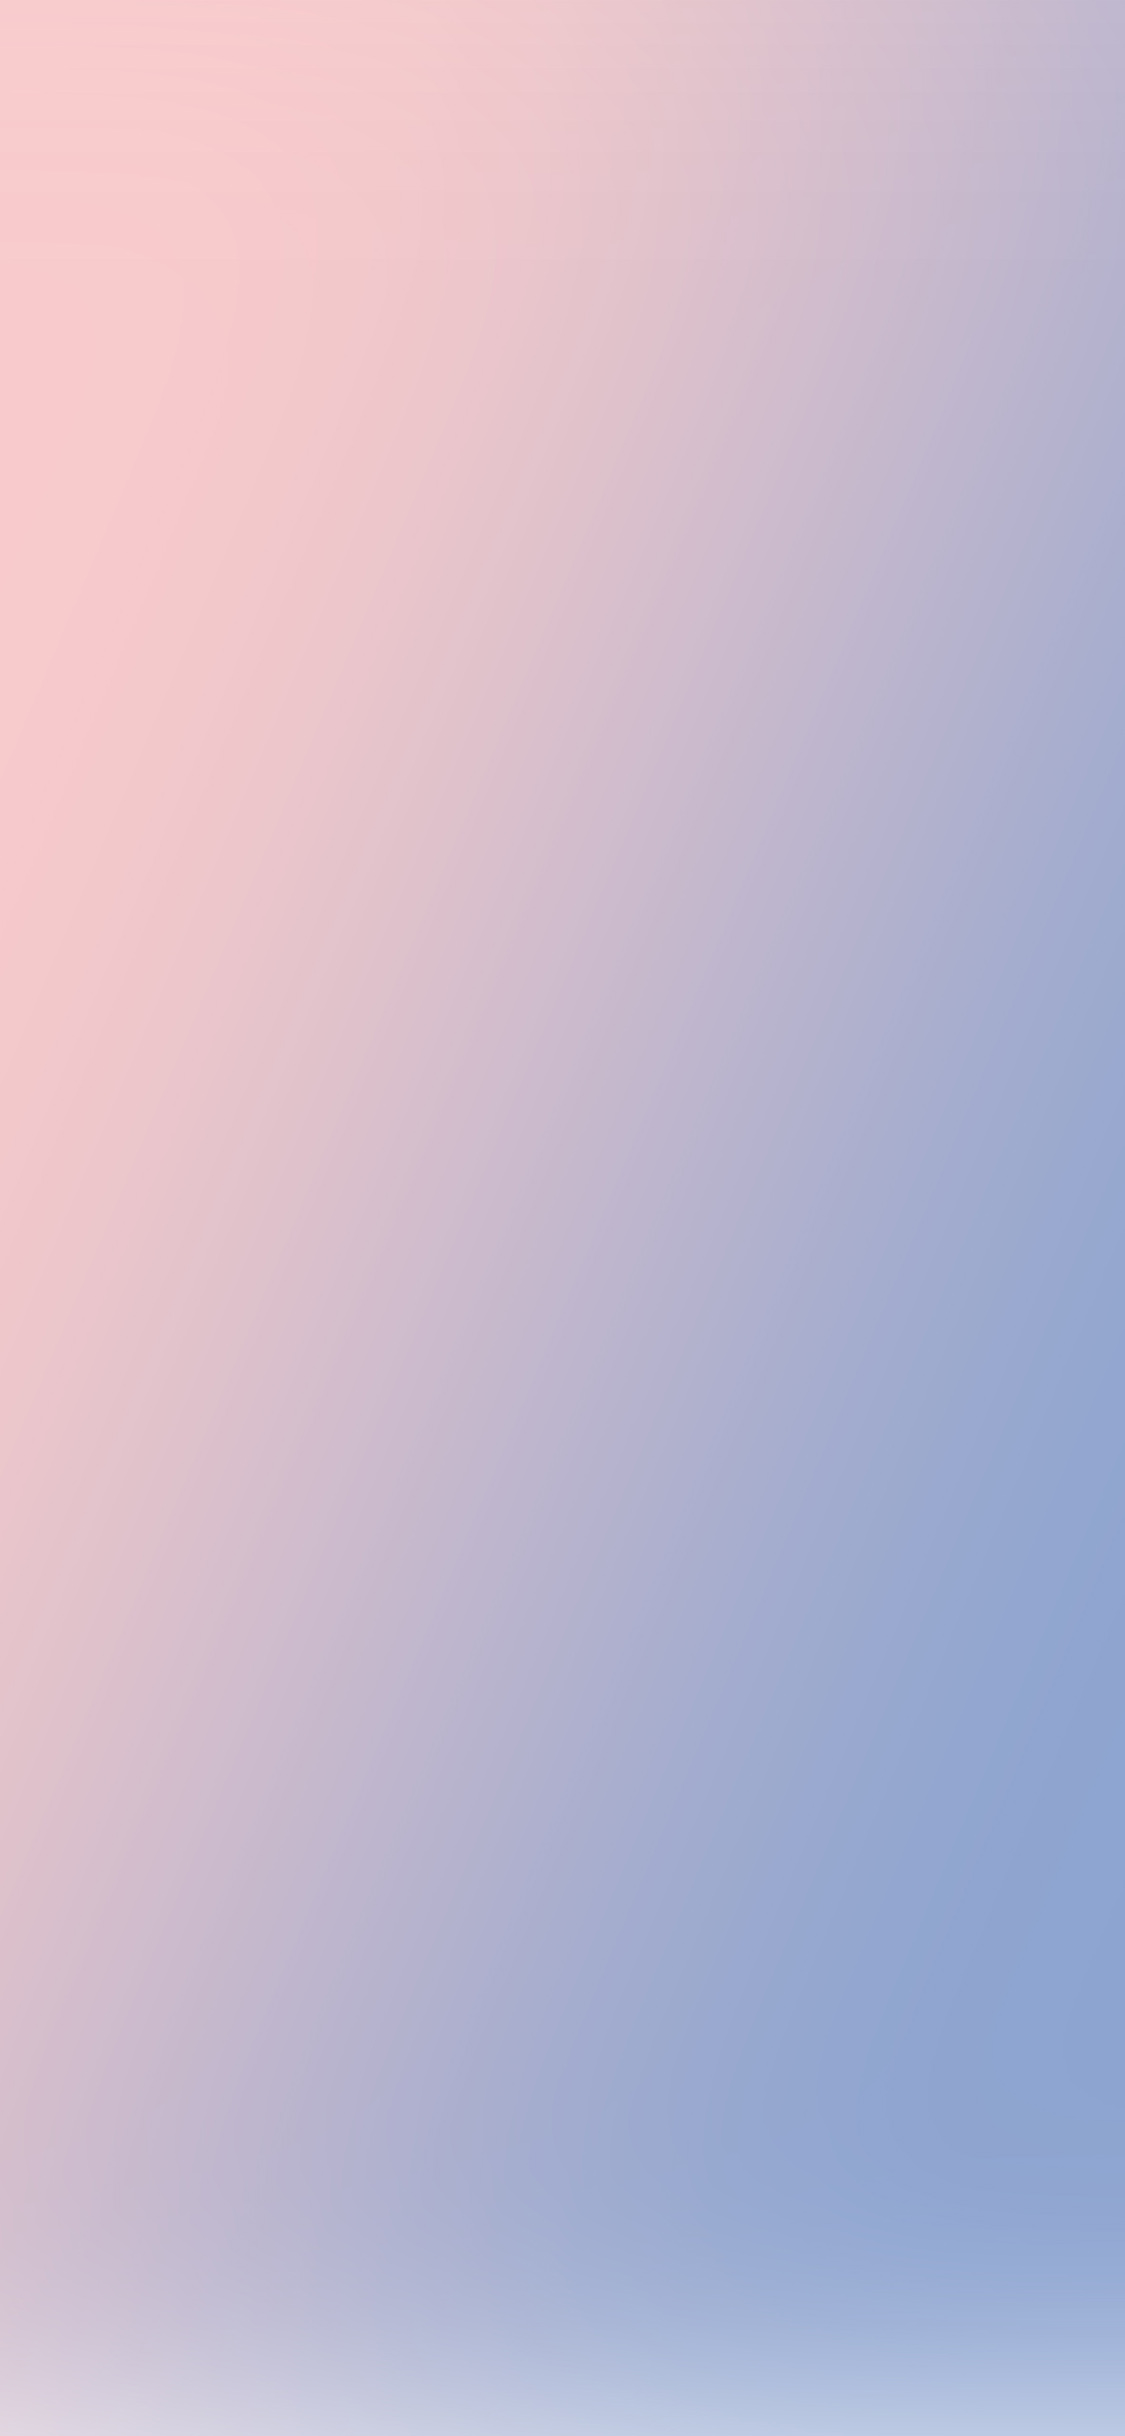 iPhone X wallpaper. panton pink blue gradation blur